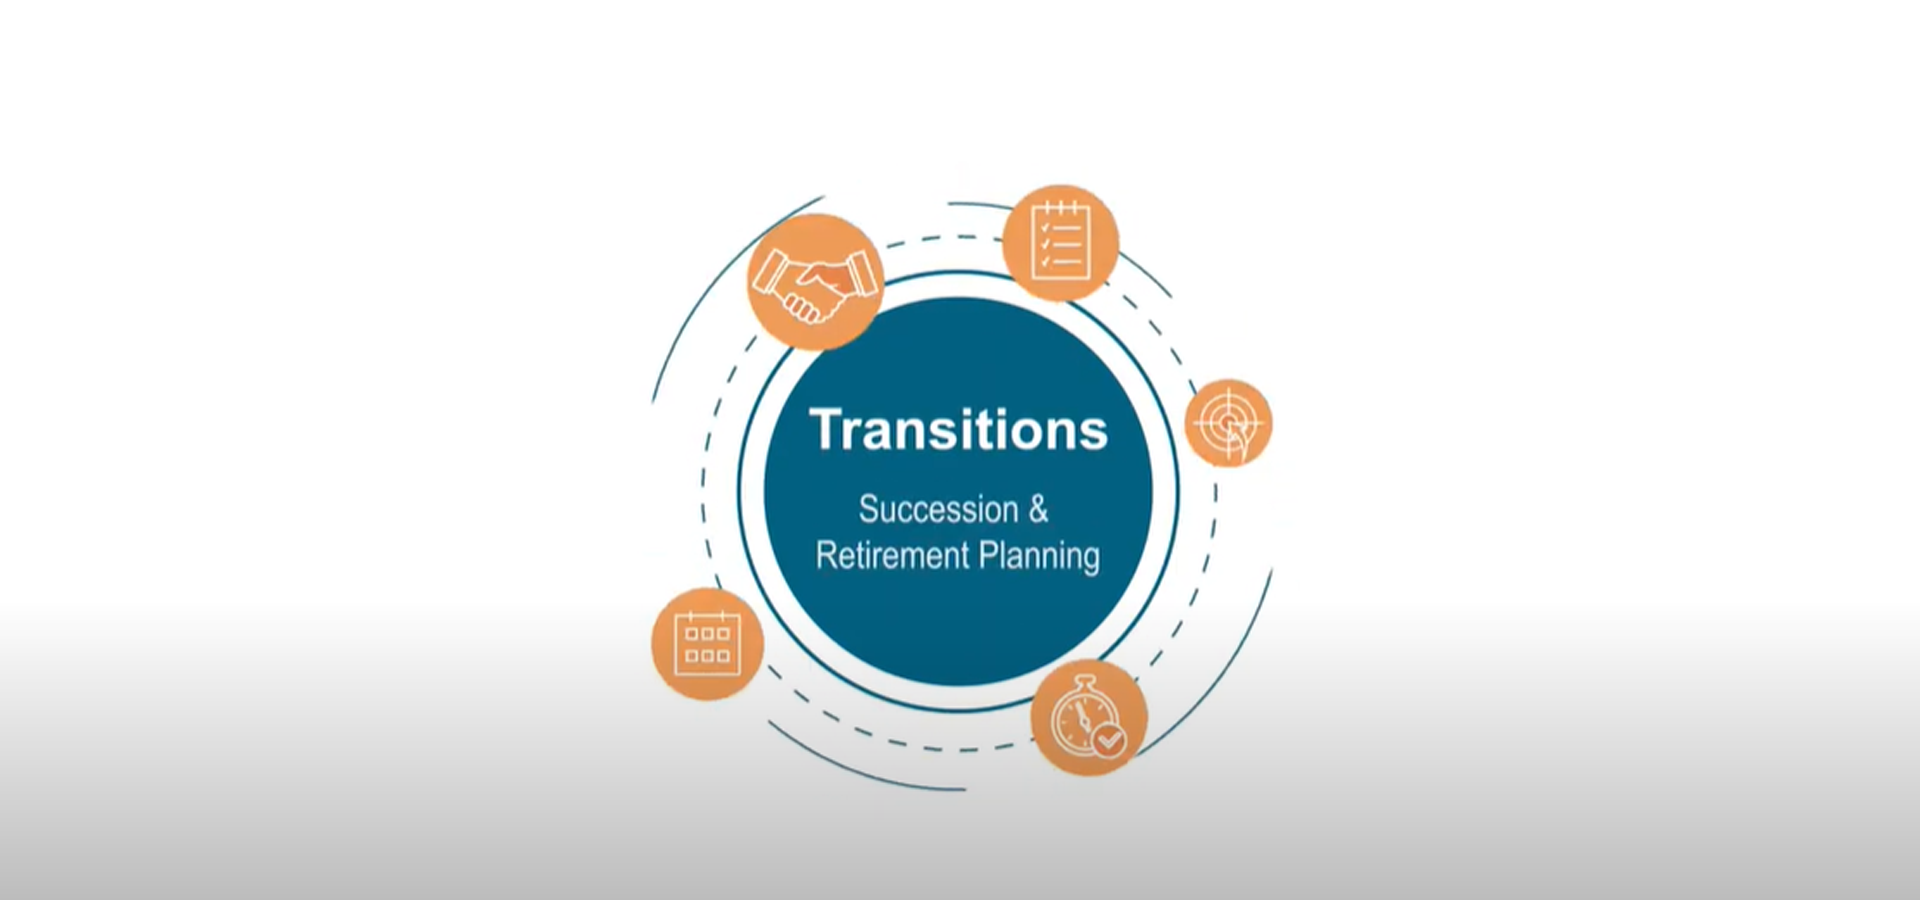 Transitions: Succession & Retirement Planning